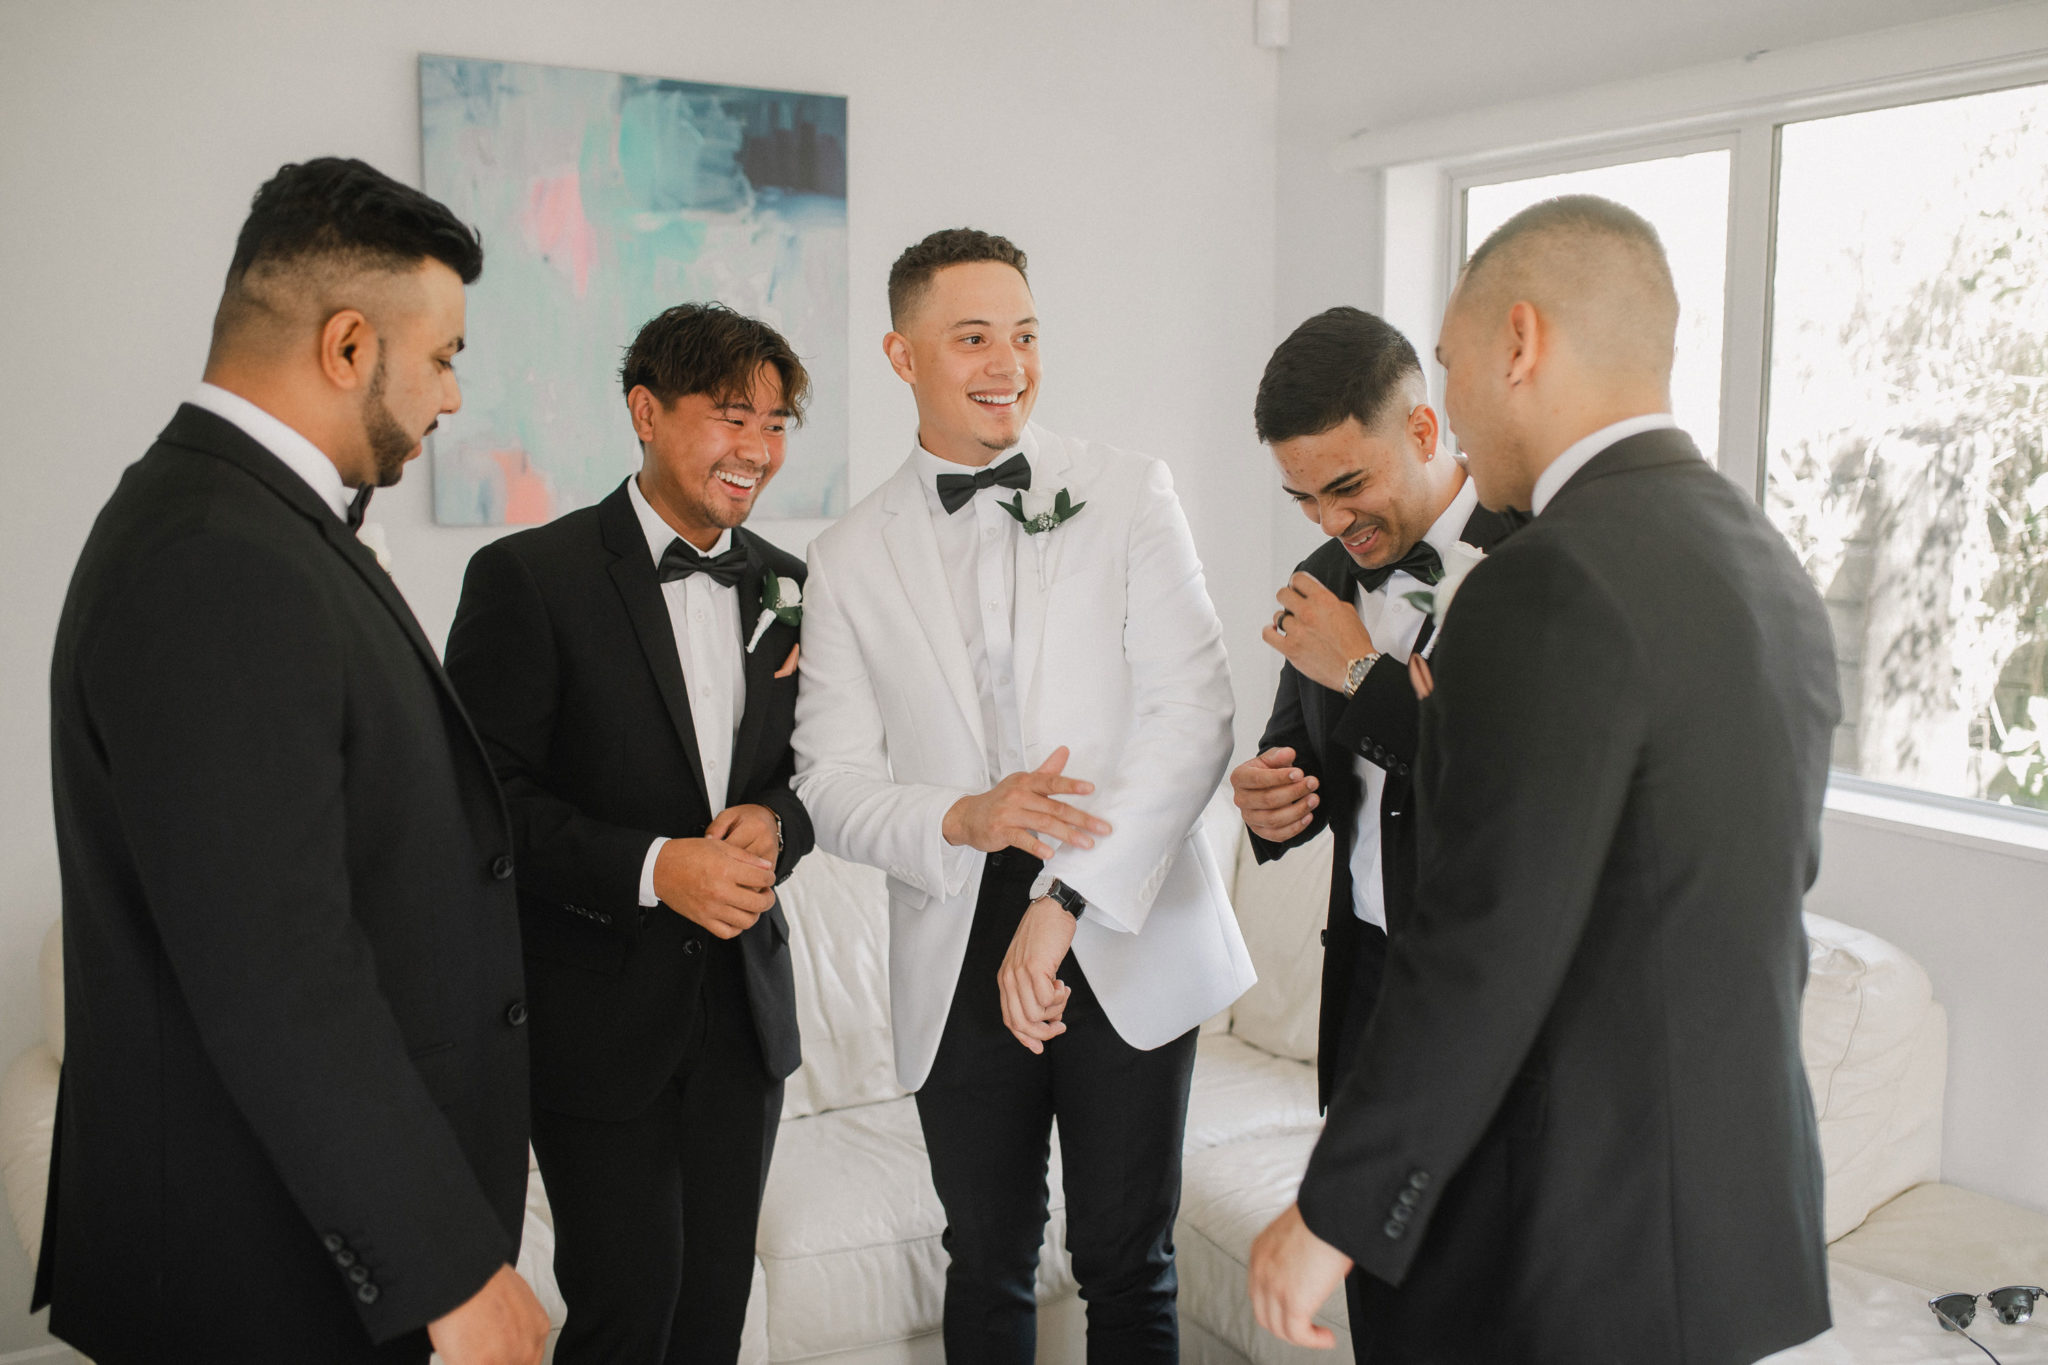 groom and groomsmen having a laugh